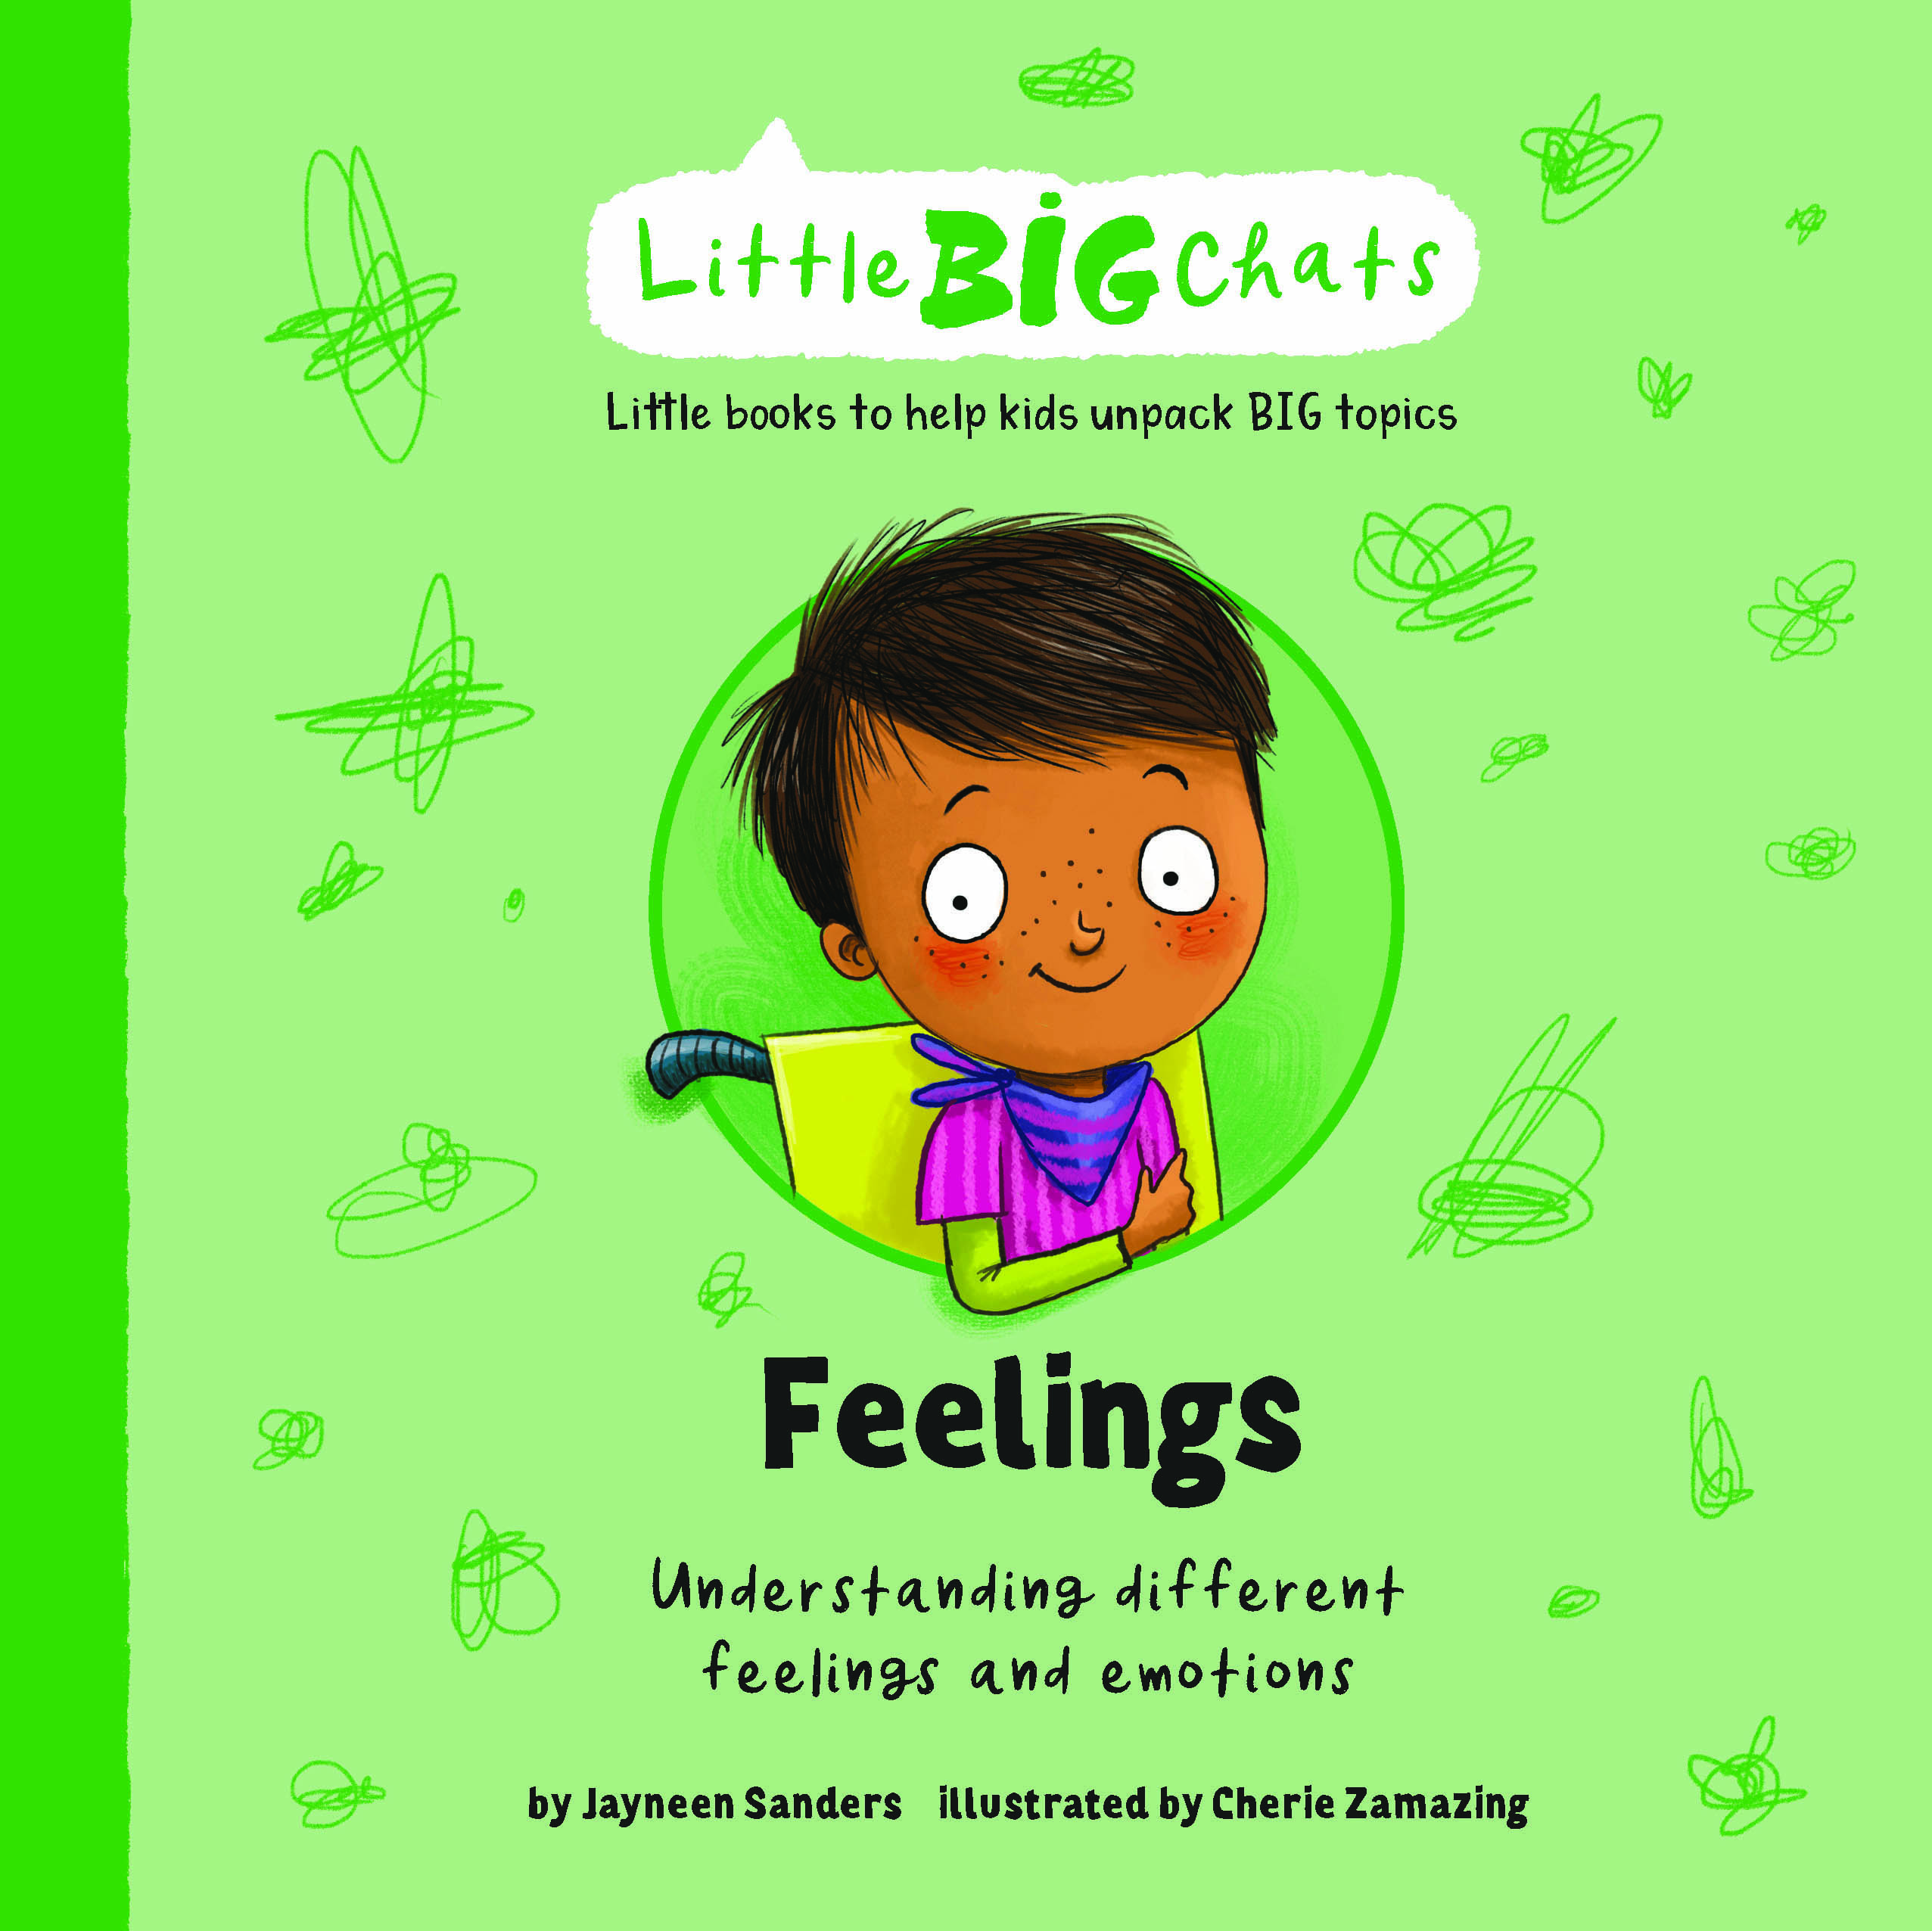 Little Big Chats – Feelings